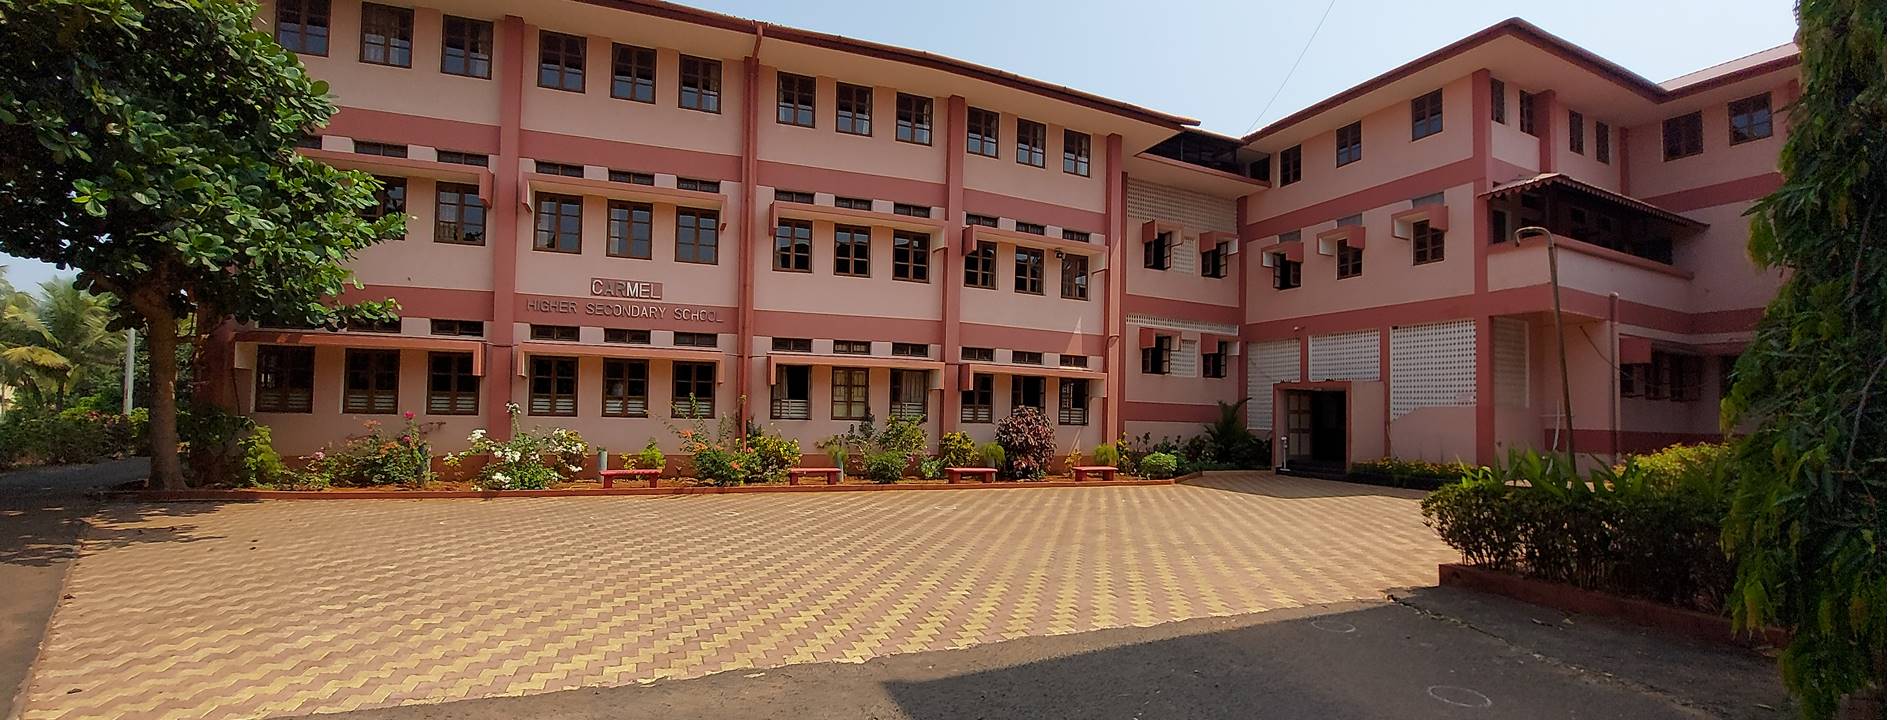 Carmel Higher Secondary School, Nuvem - Goa